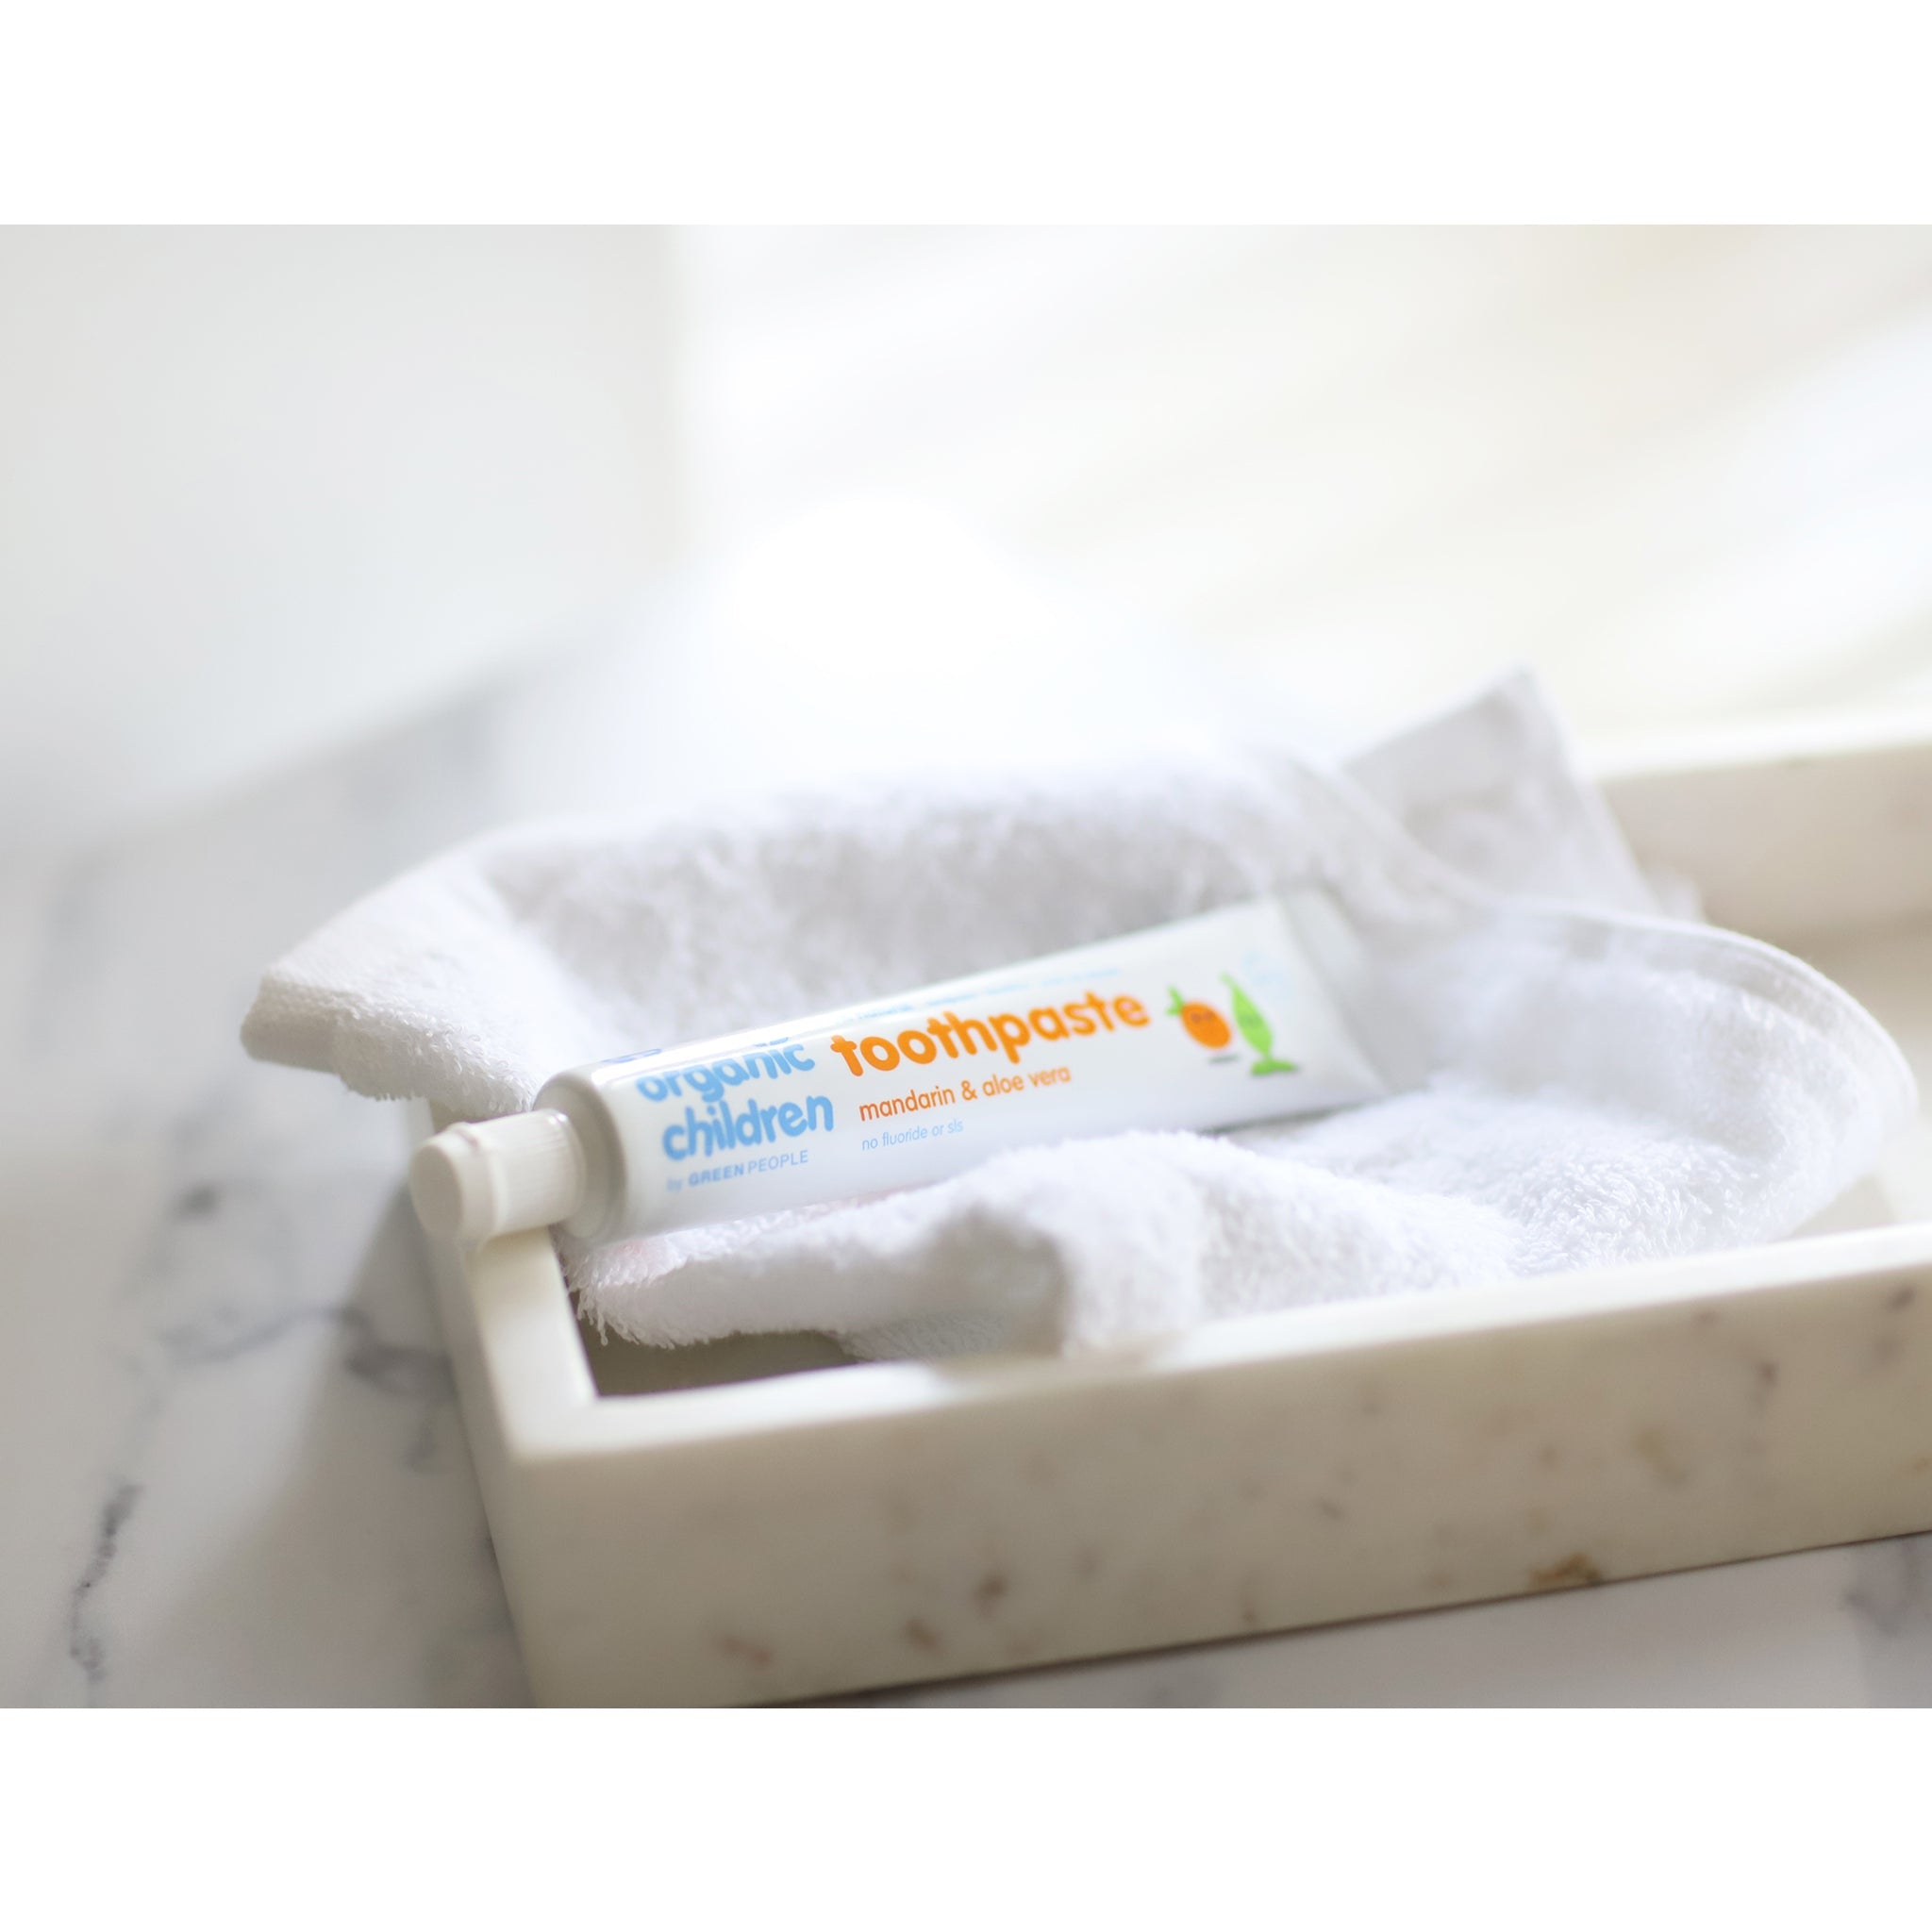 Organic Children Mandarin & Aloe Vera Toothpaste (no fluoride) - mypure.co.uk